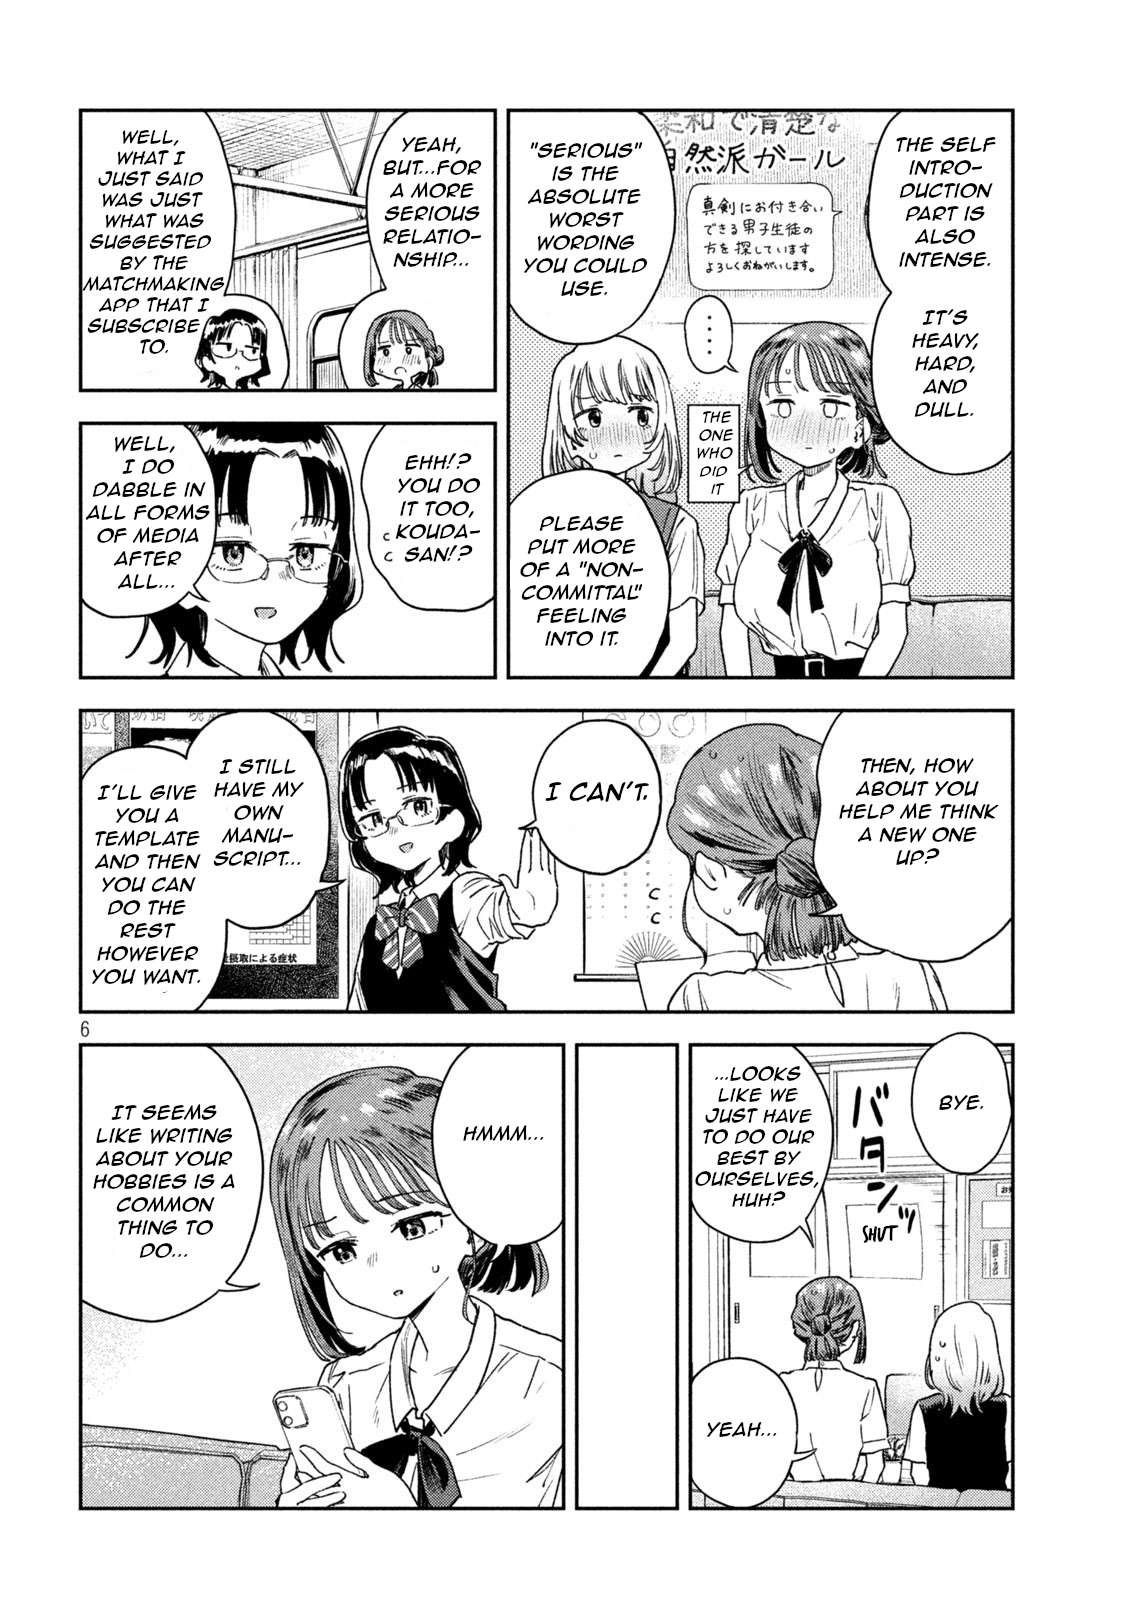 Miyo-Chan Sensei Said So - chapter 8 - #6